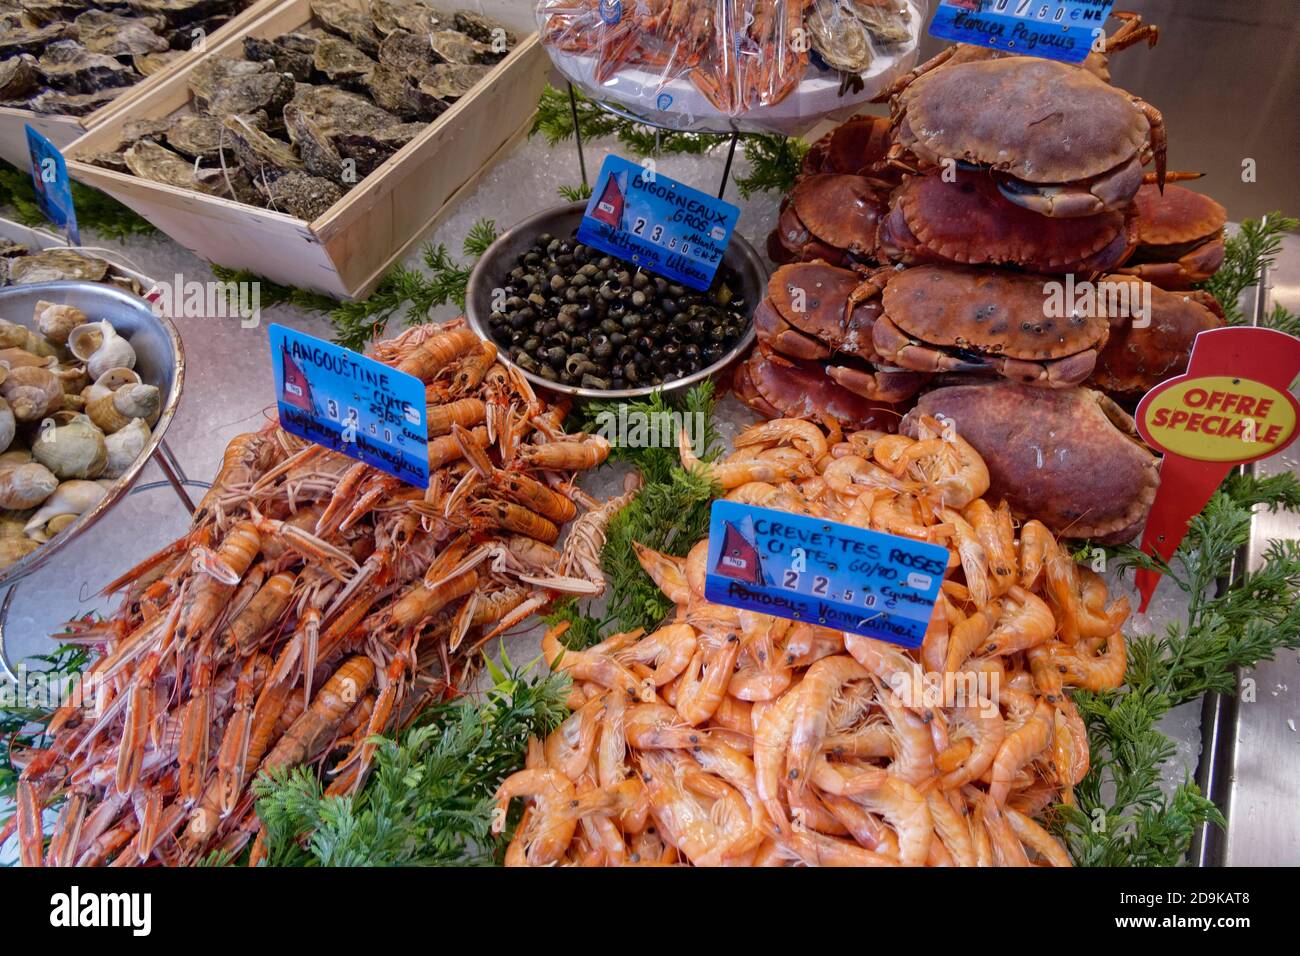 Meeresfruechte,  Saint-Malo, Gourmet, Feinkost, Delikatessen, Krebse, Langoustinen, Austern, Scampi, Garnelen, Stock Photo